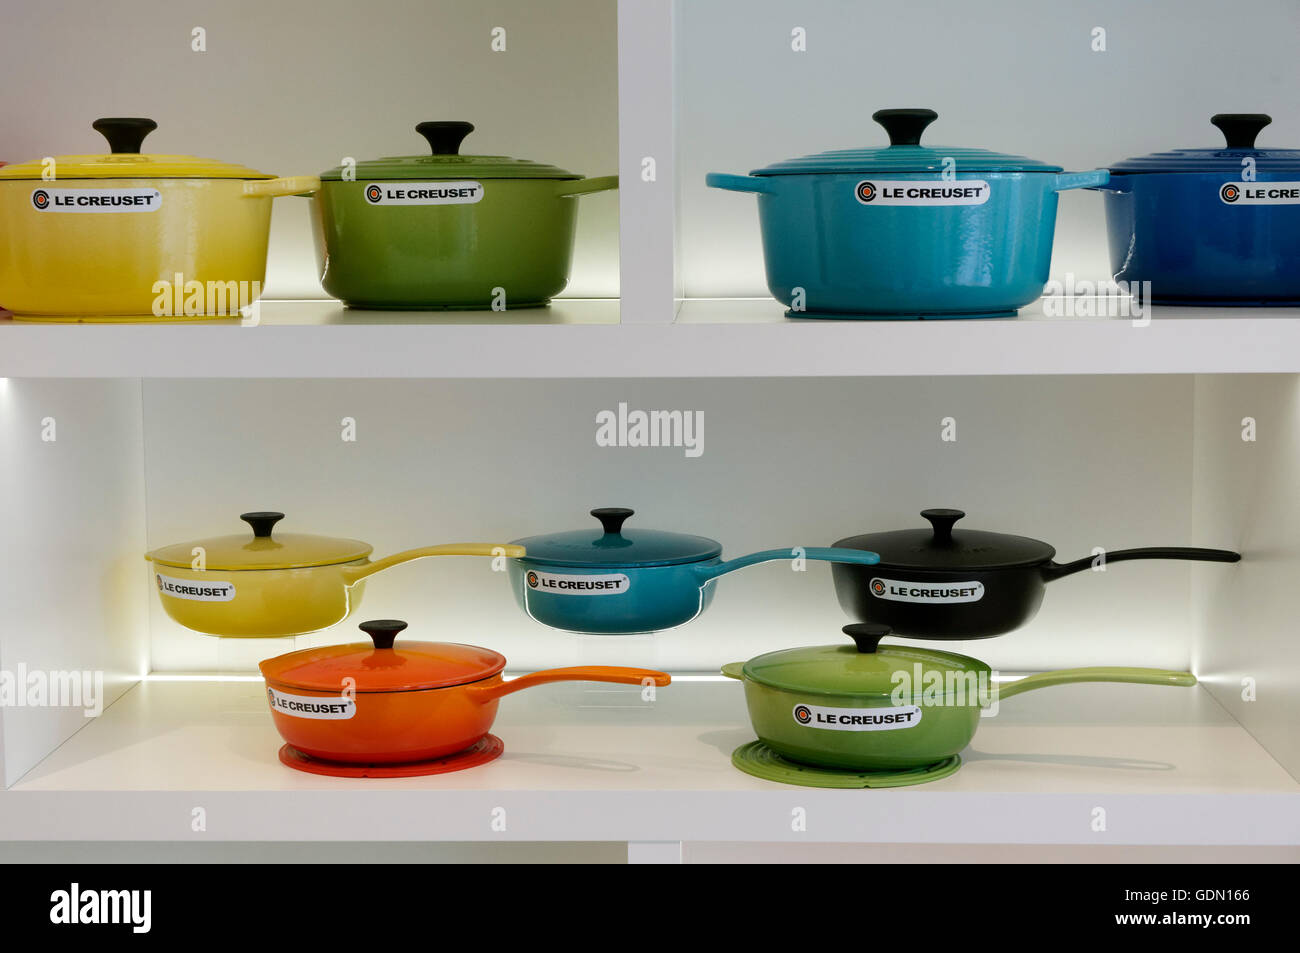 https://c8.alamy.com/comp/GDN166/colorful-le-creuset-enamelled-cast-iron-cookware-on-white-shelving-GDN166.jpg